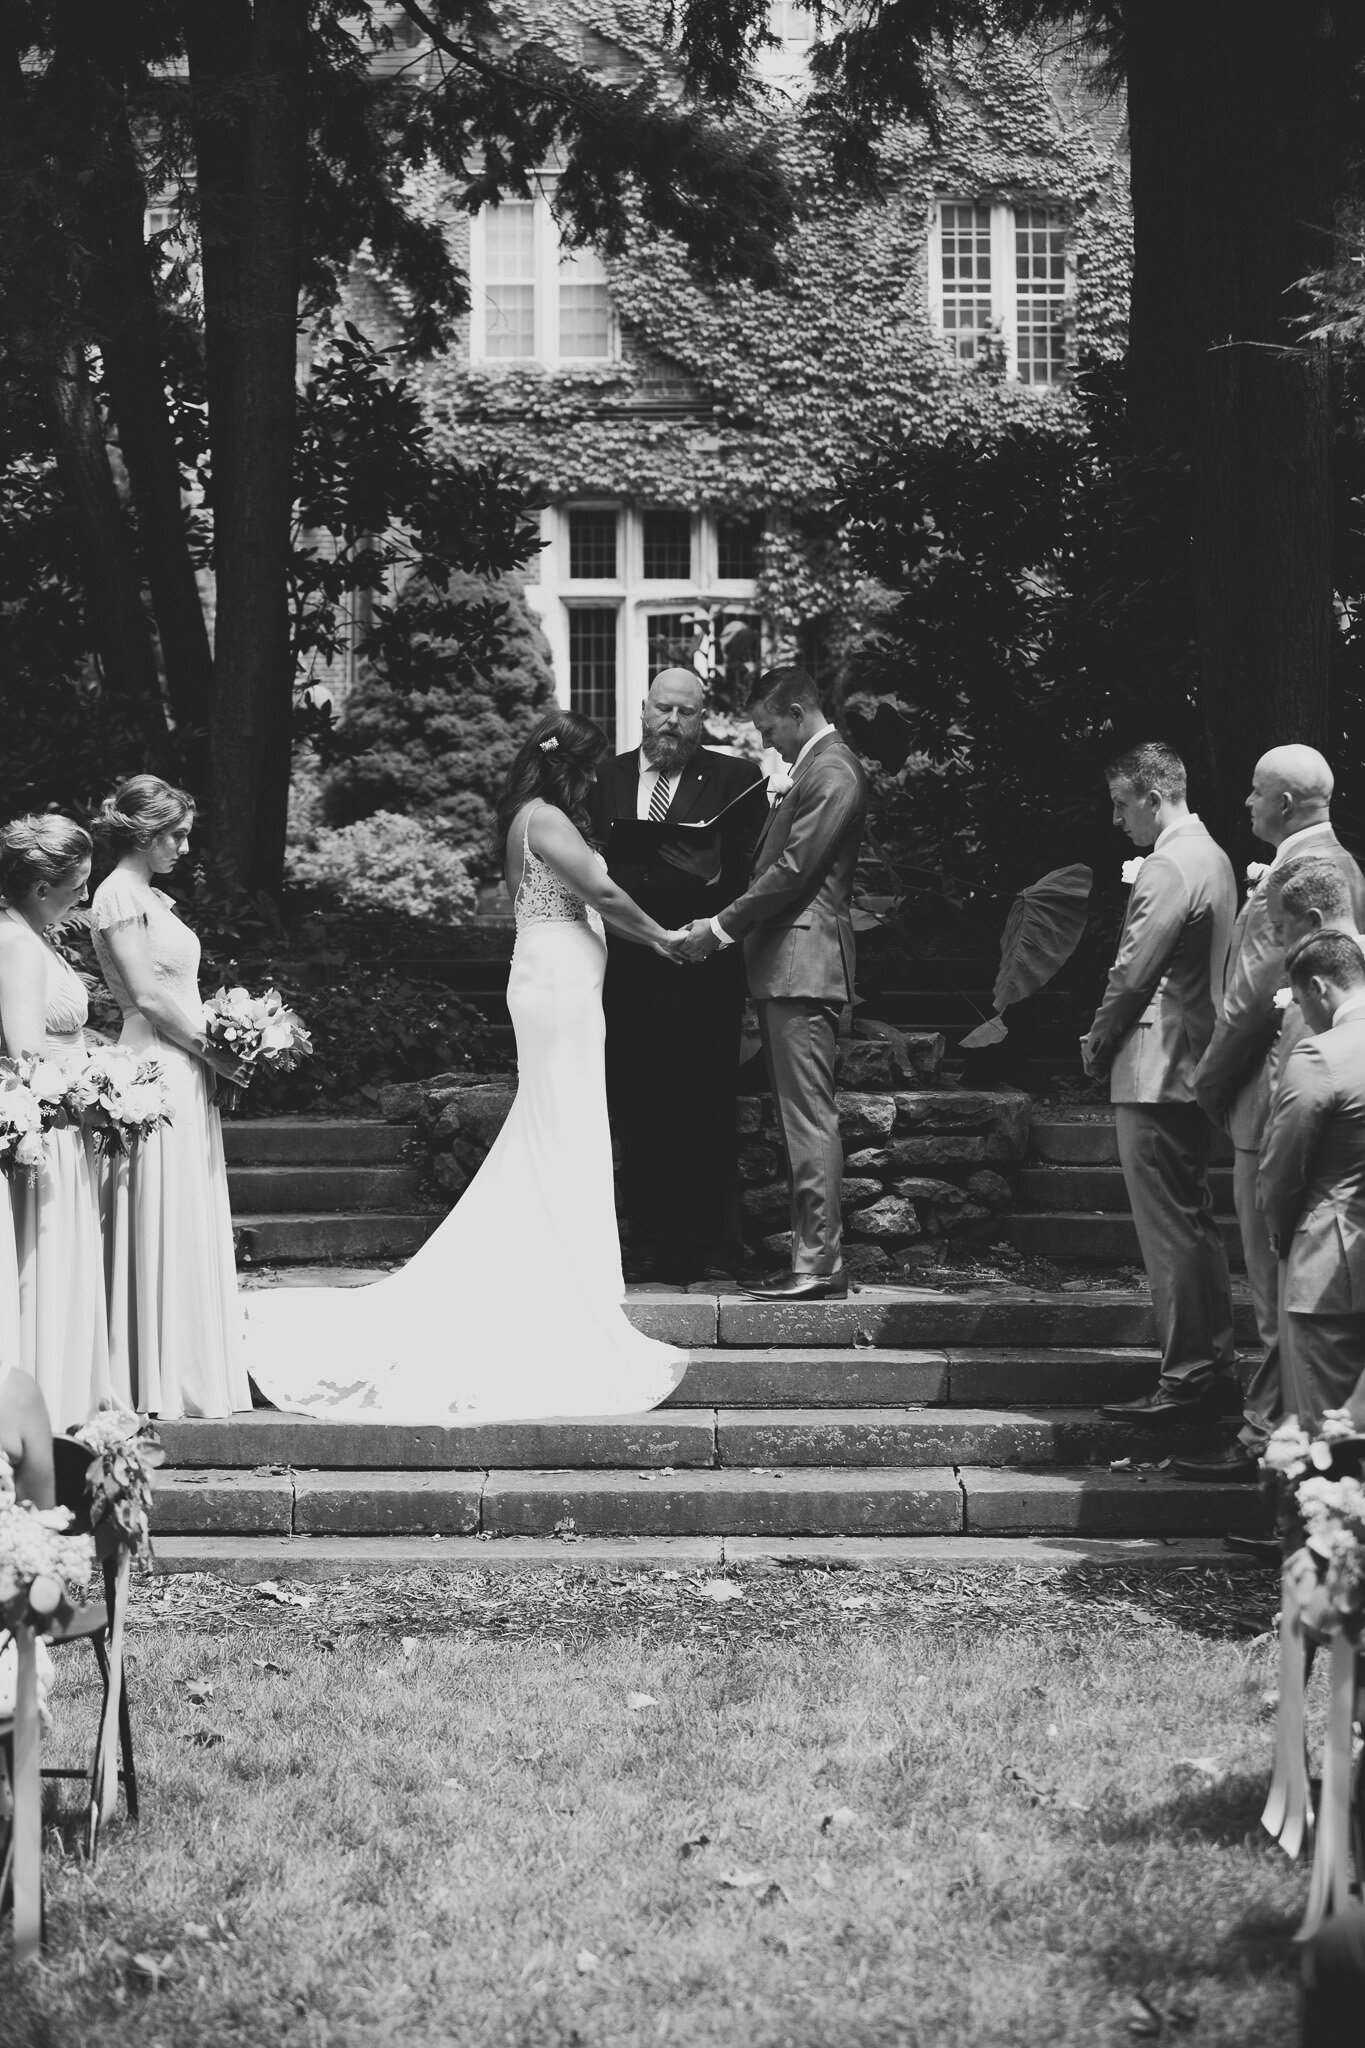 GRAM Wedding - Grand Rapids Art Musuem - Grand Rapids Wedding Photographer - Devos Place Wedding - Aquinas Wedding - Aquinas College Wedding - J Darling Photo - Jessica Darling047.jpg